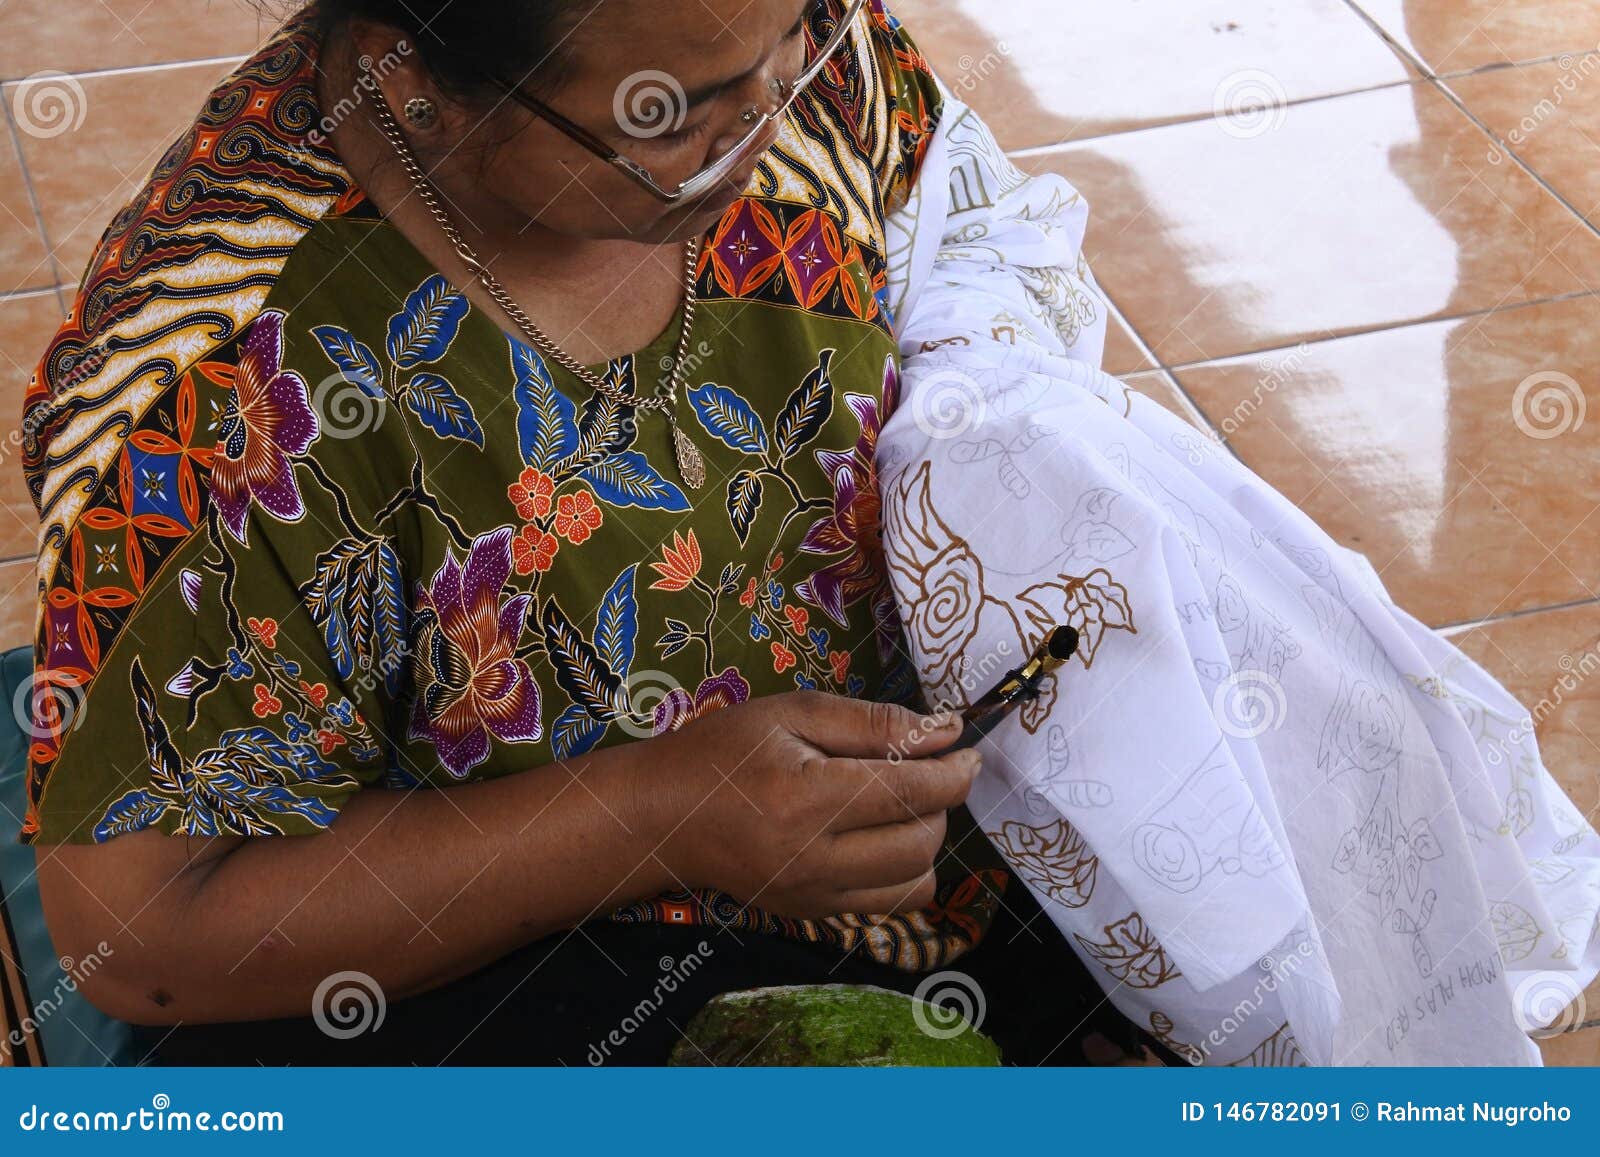 The Process Of Making Batik Editorial Photo Image of 